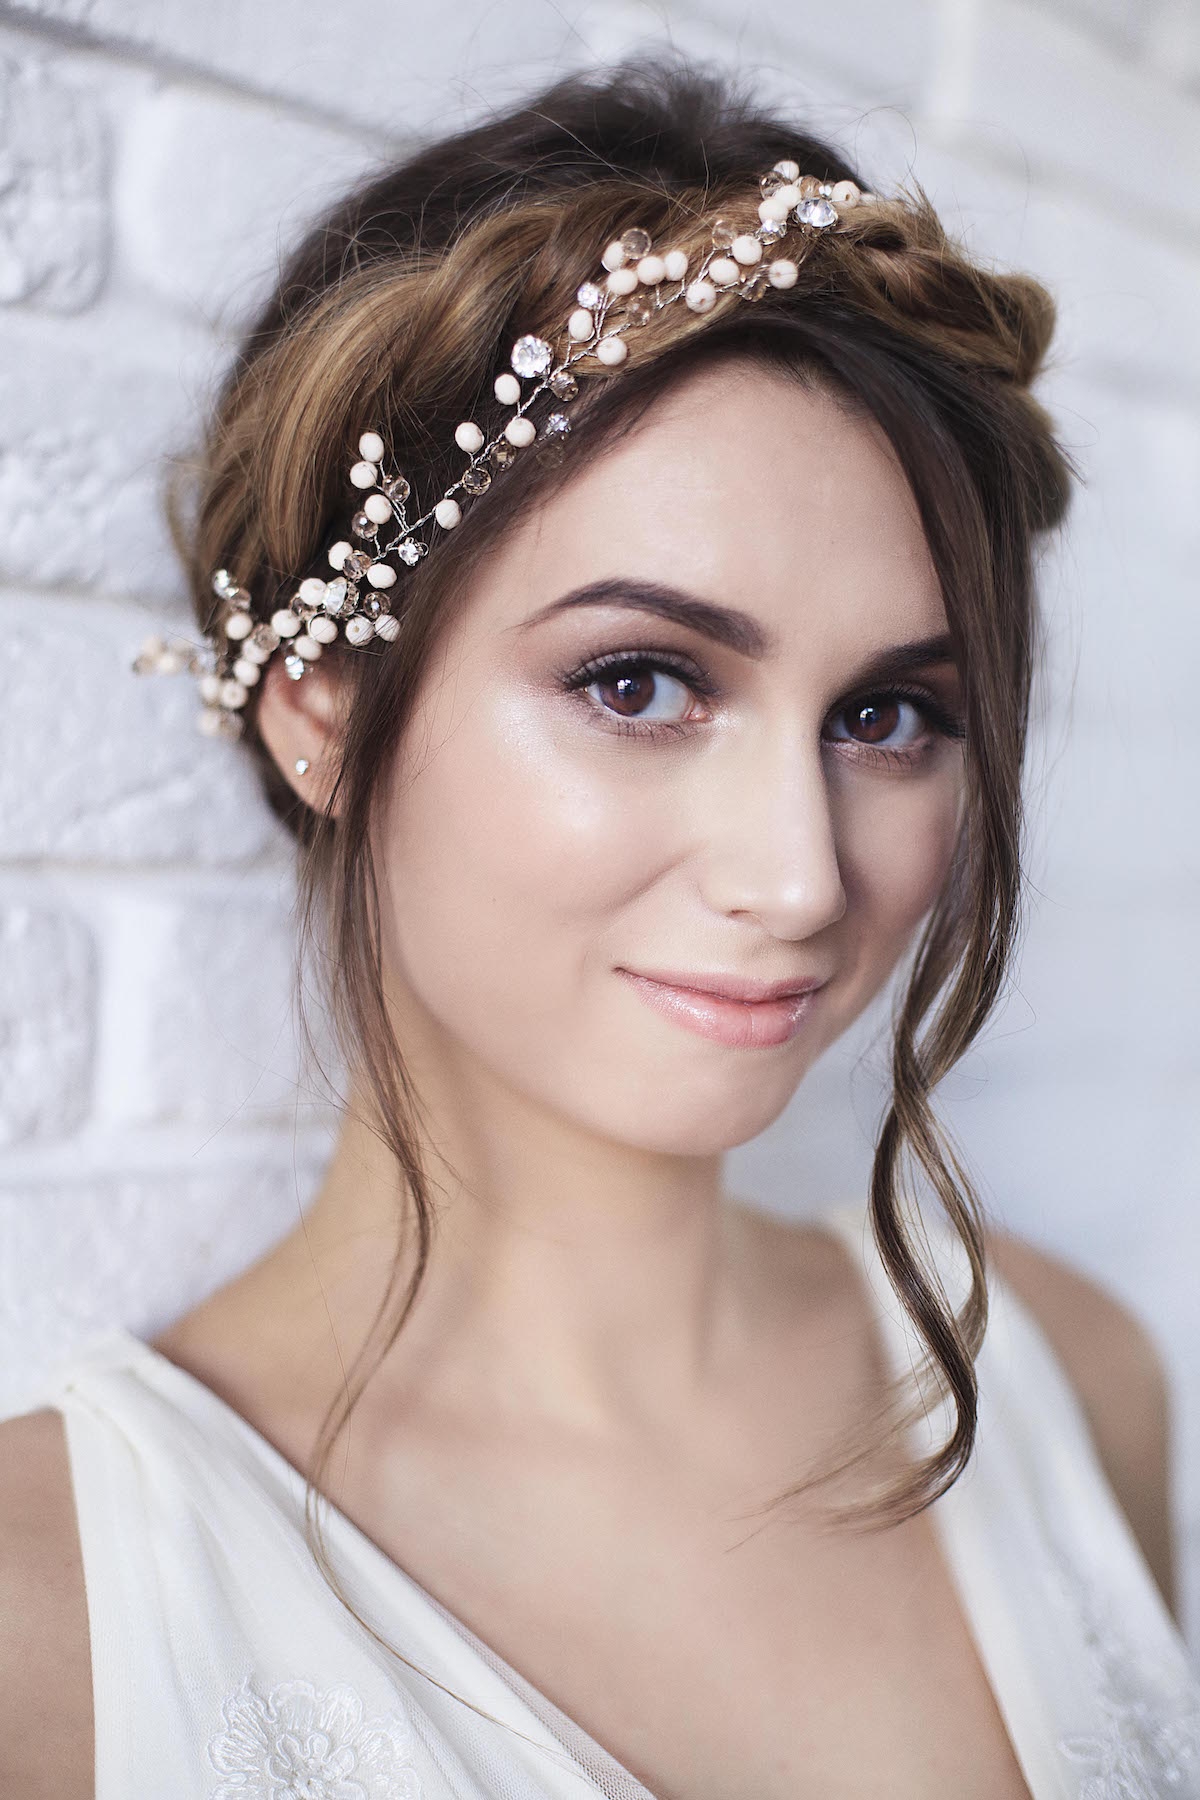 Spring/Summer Bridal Lookbook from Salon “Ana Ciorici”